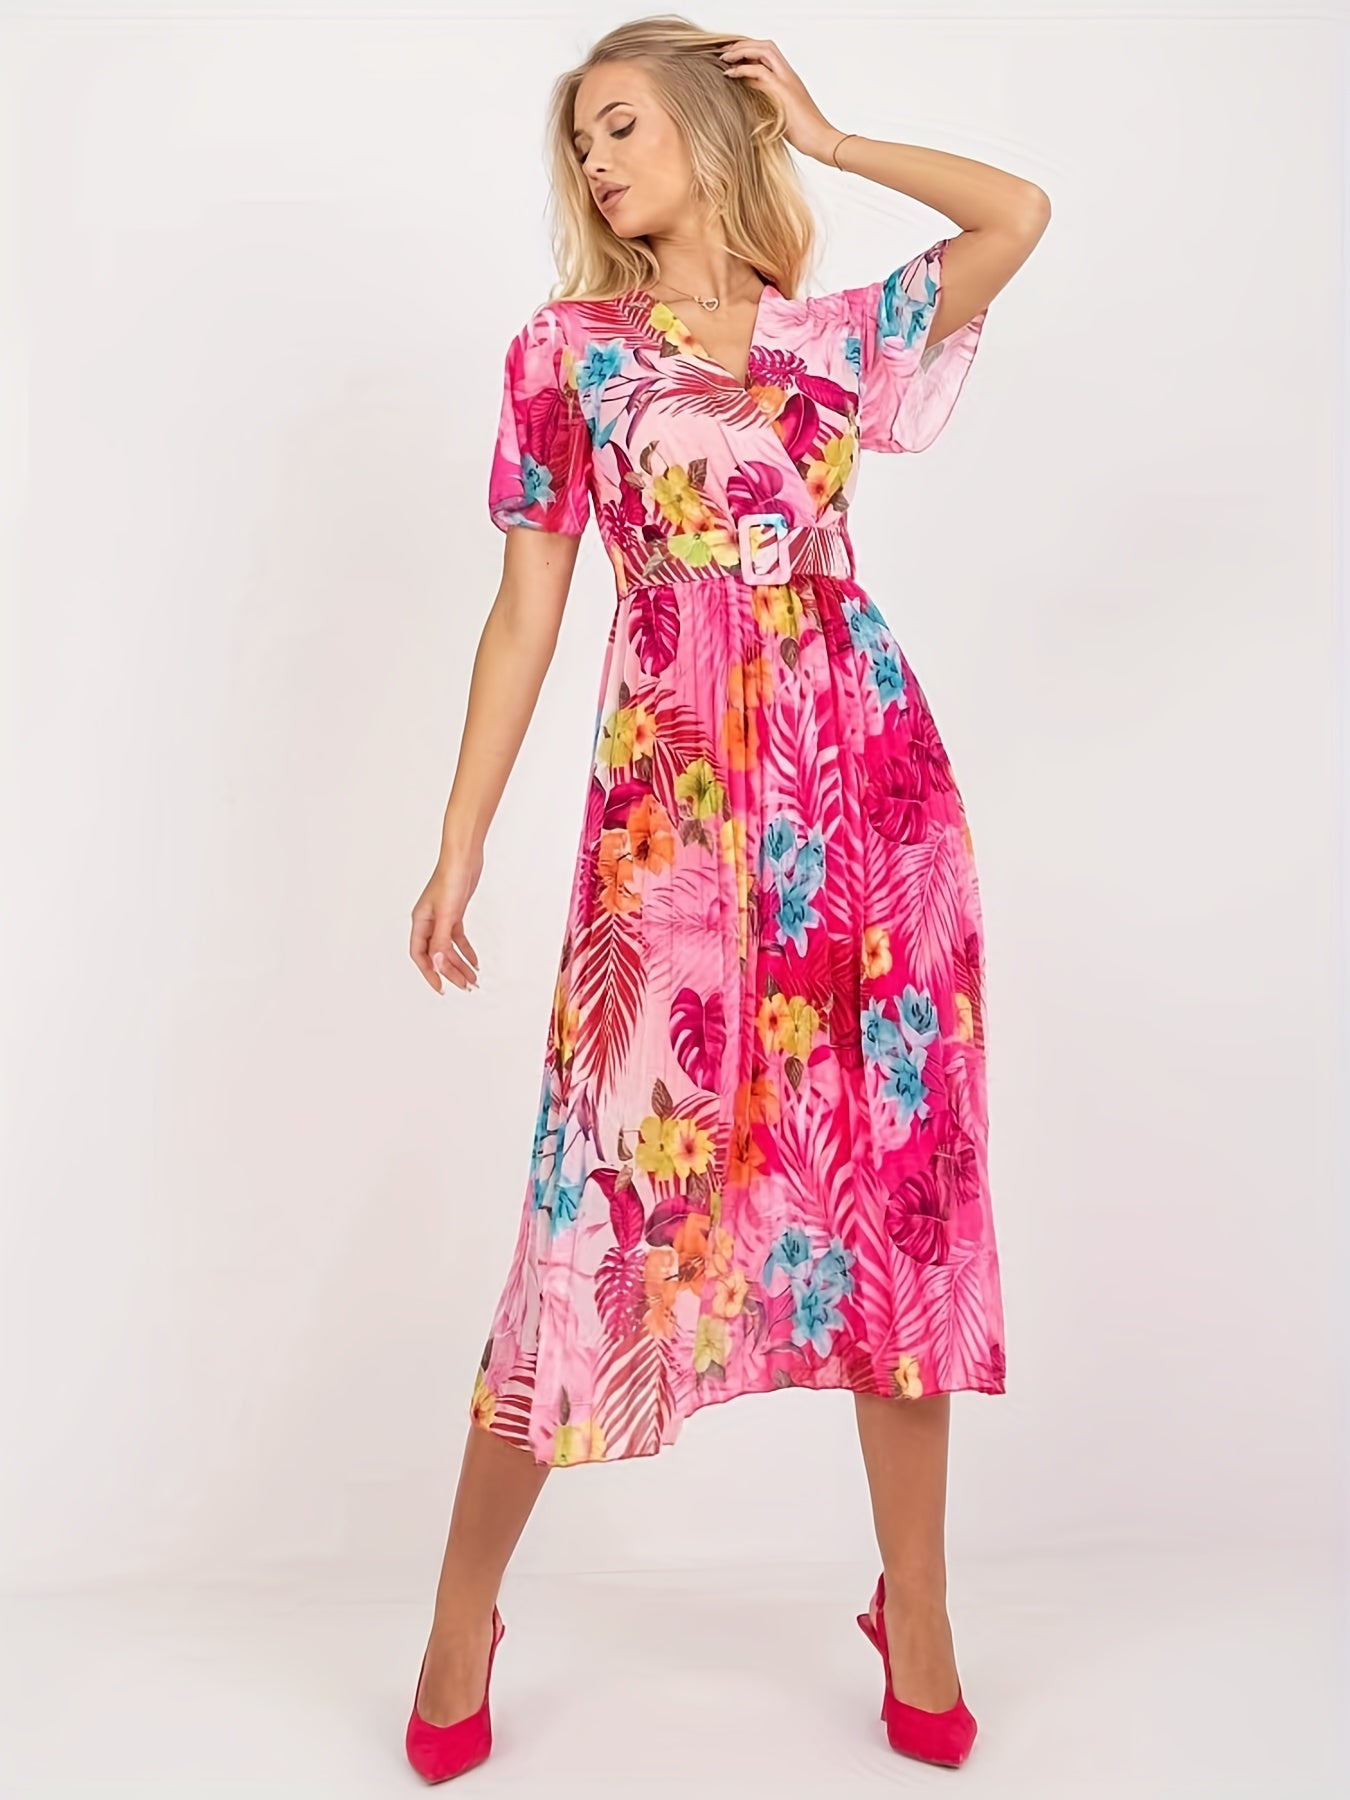 vlovelaw  Floral Print Pleat Dress With Belt, Boho Surplice Neck Short Sleeve Dress For Spring & Summer, Women's Clothing